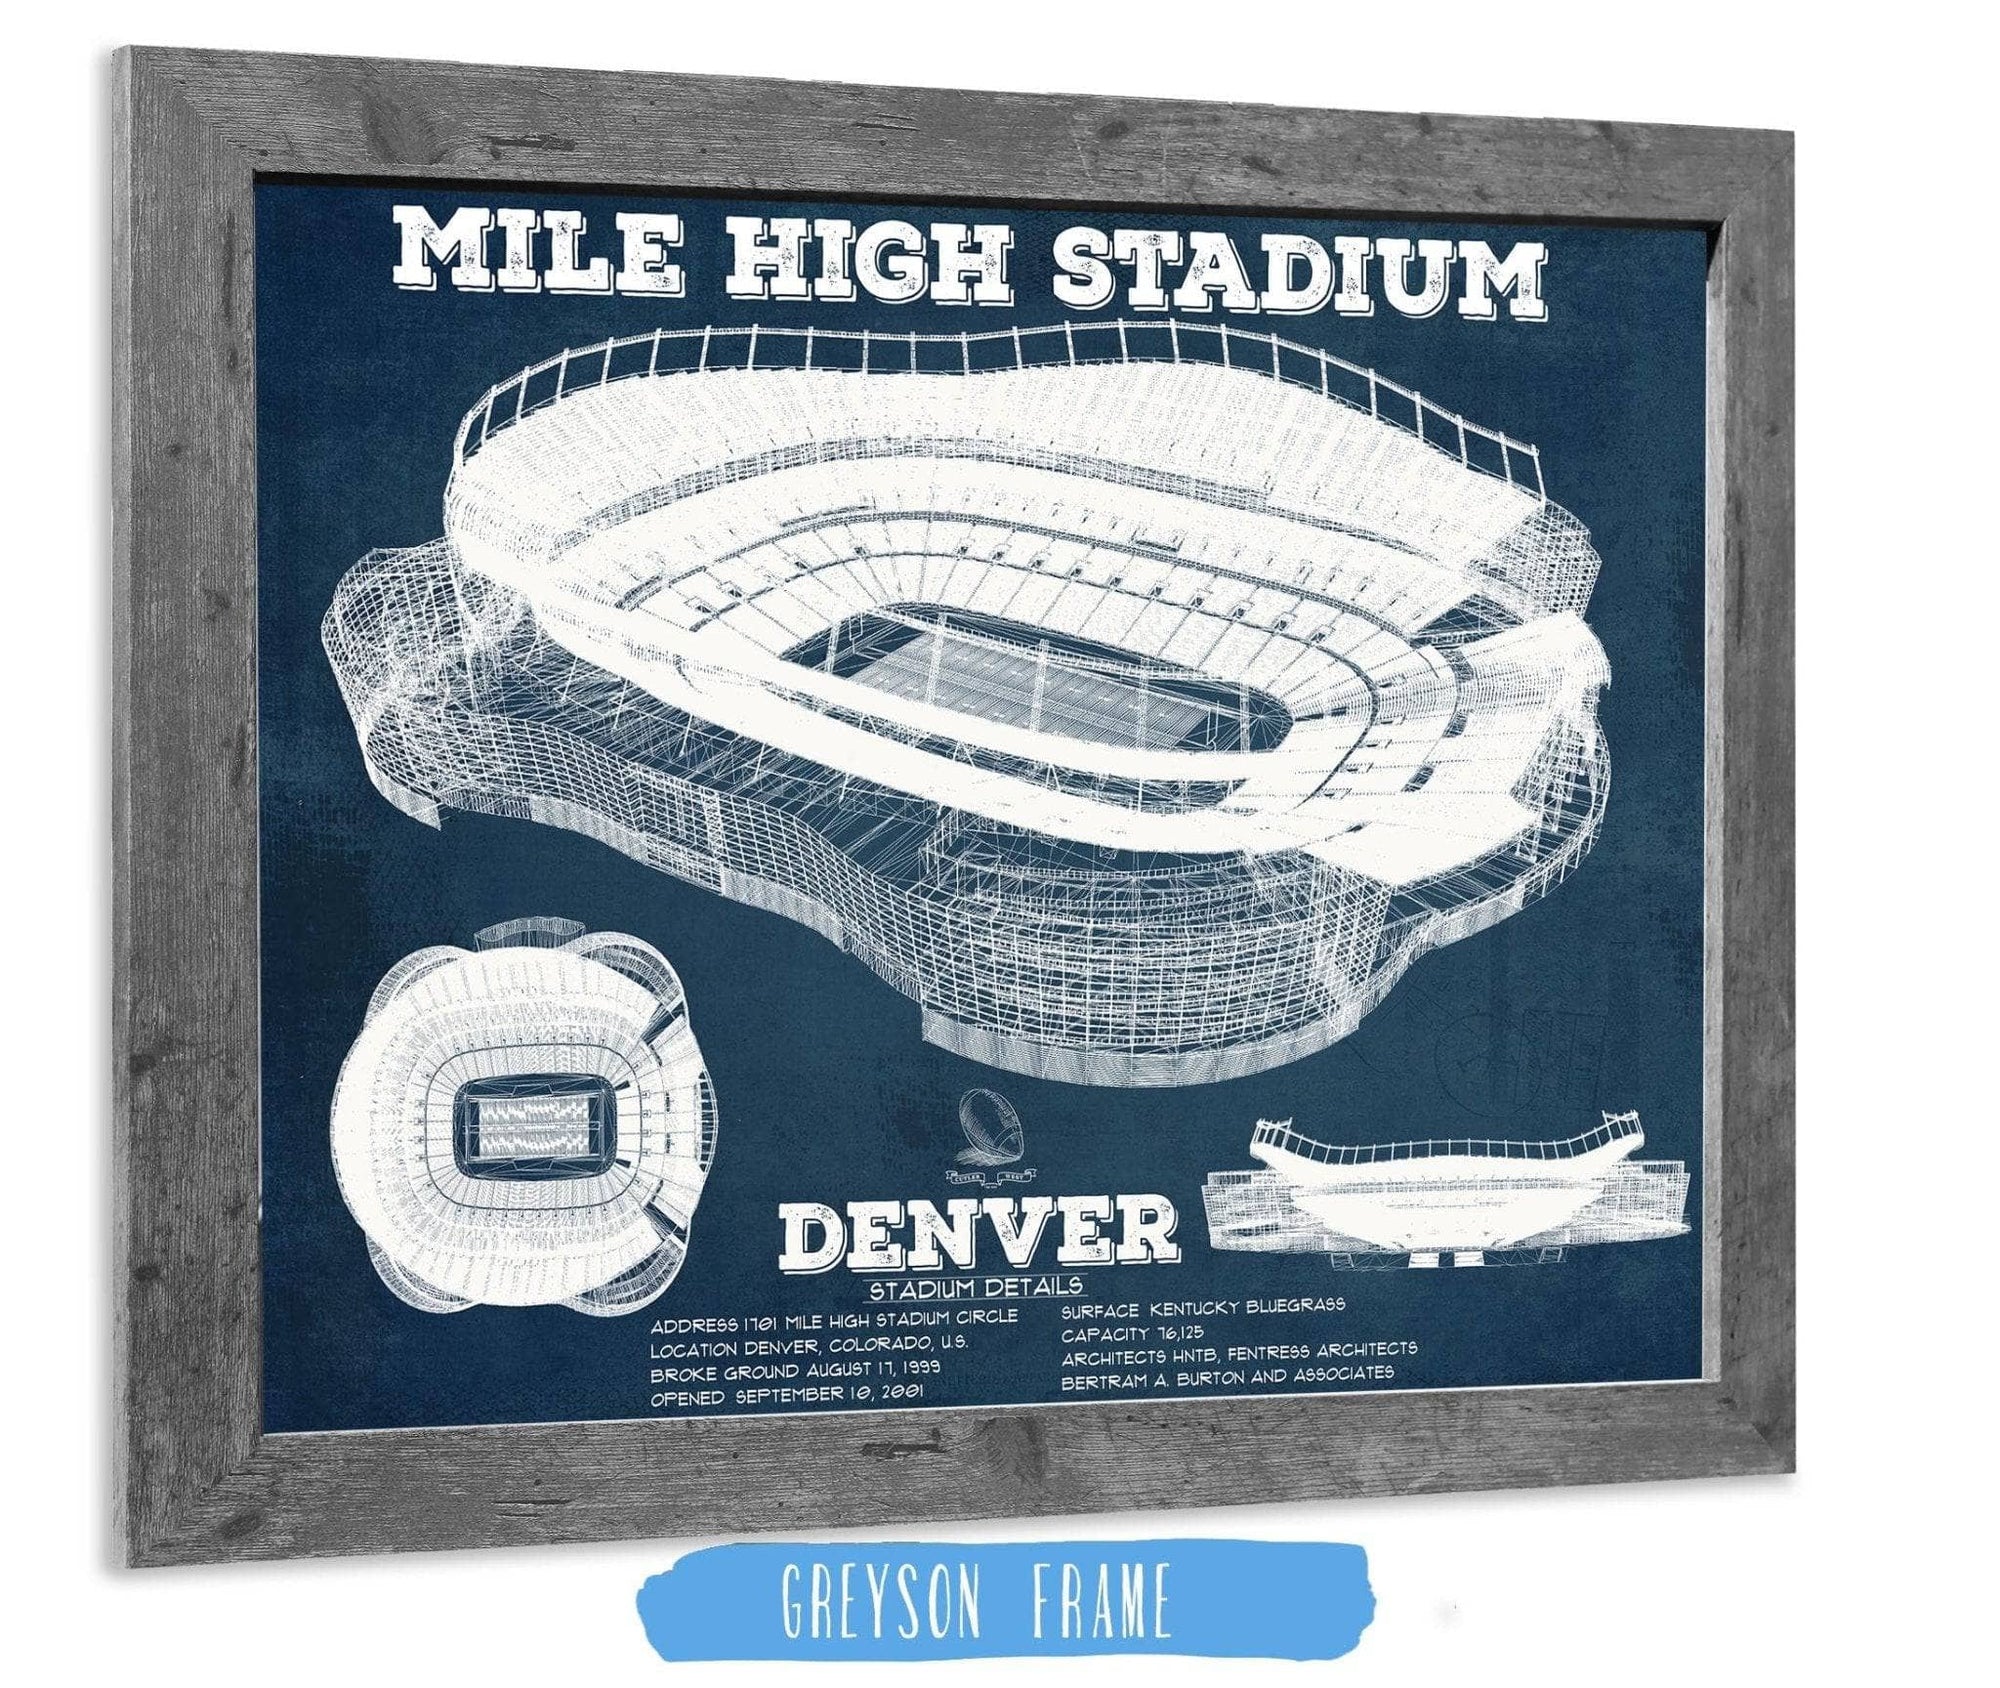 Cutler West Pro Football Collection 14" x 11" / Greyson Frame Vintage Denver Broncos Mile High Stadium Football Print 736755983-14"-x-11"55410